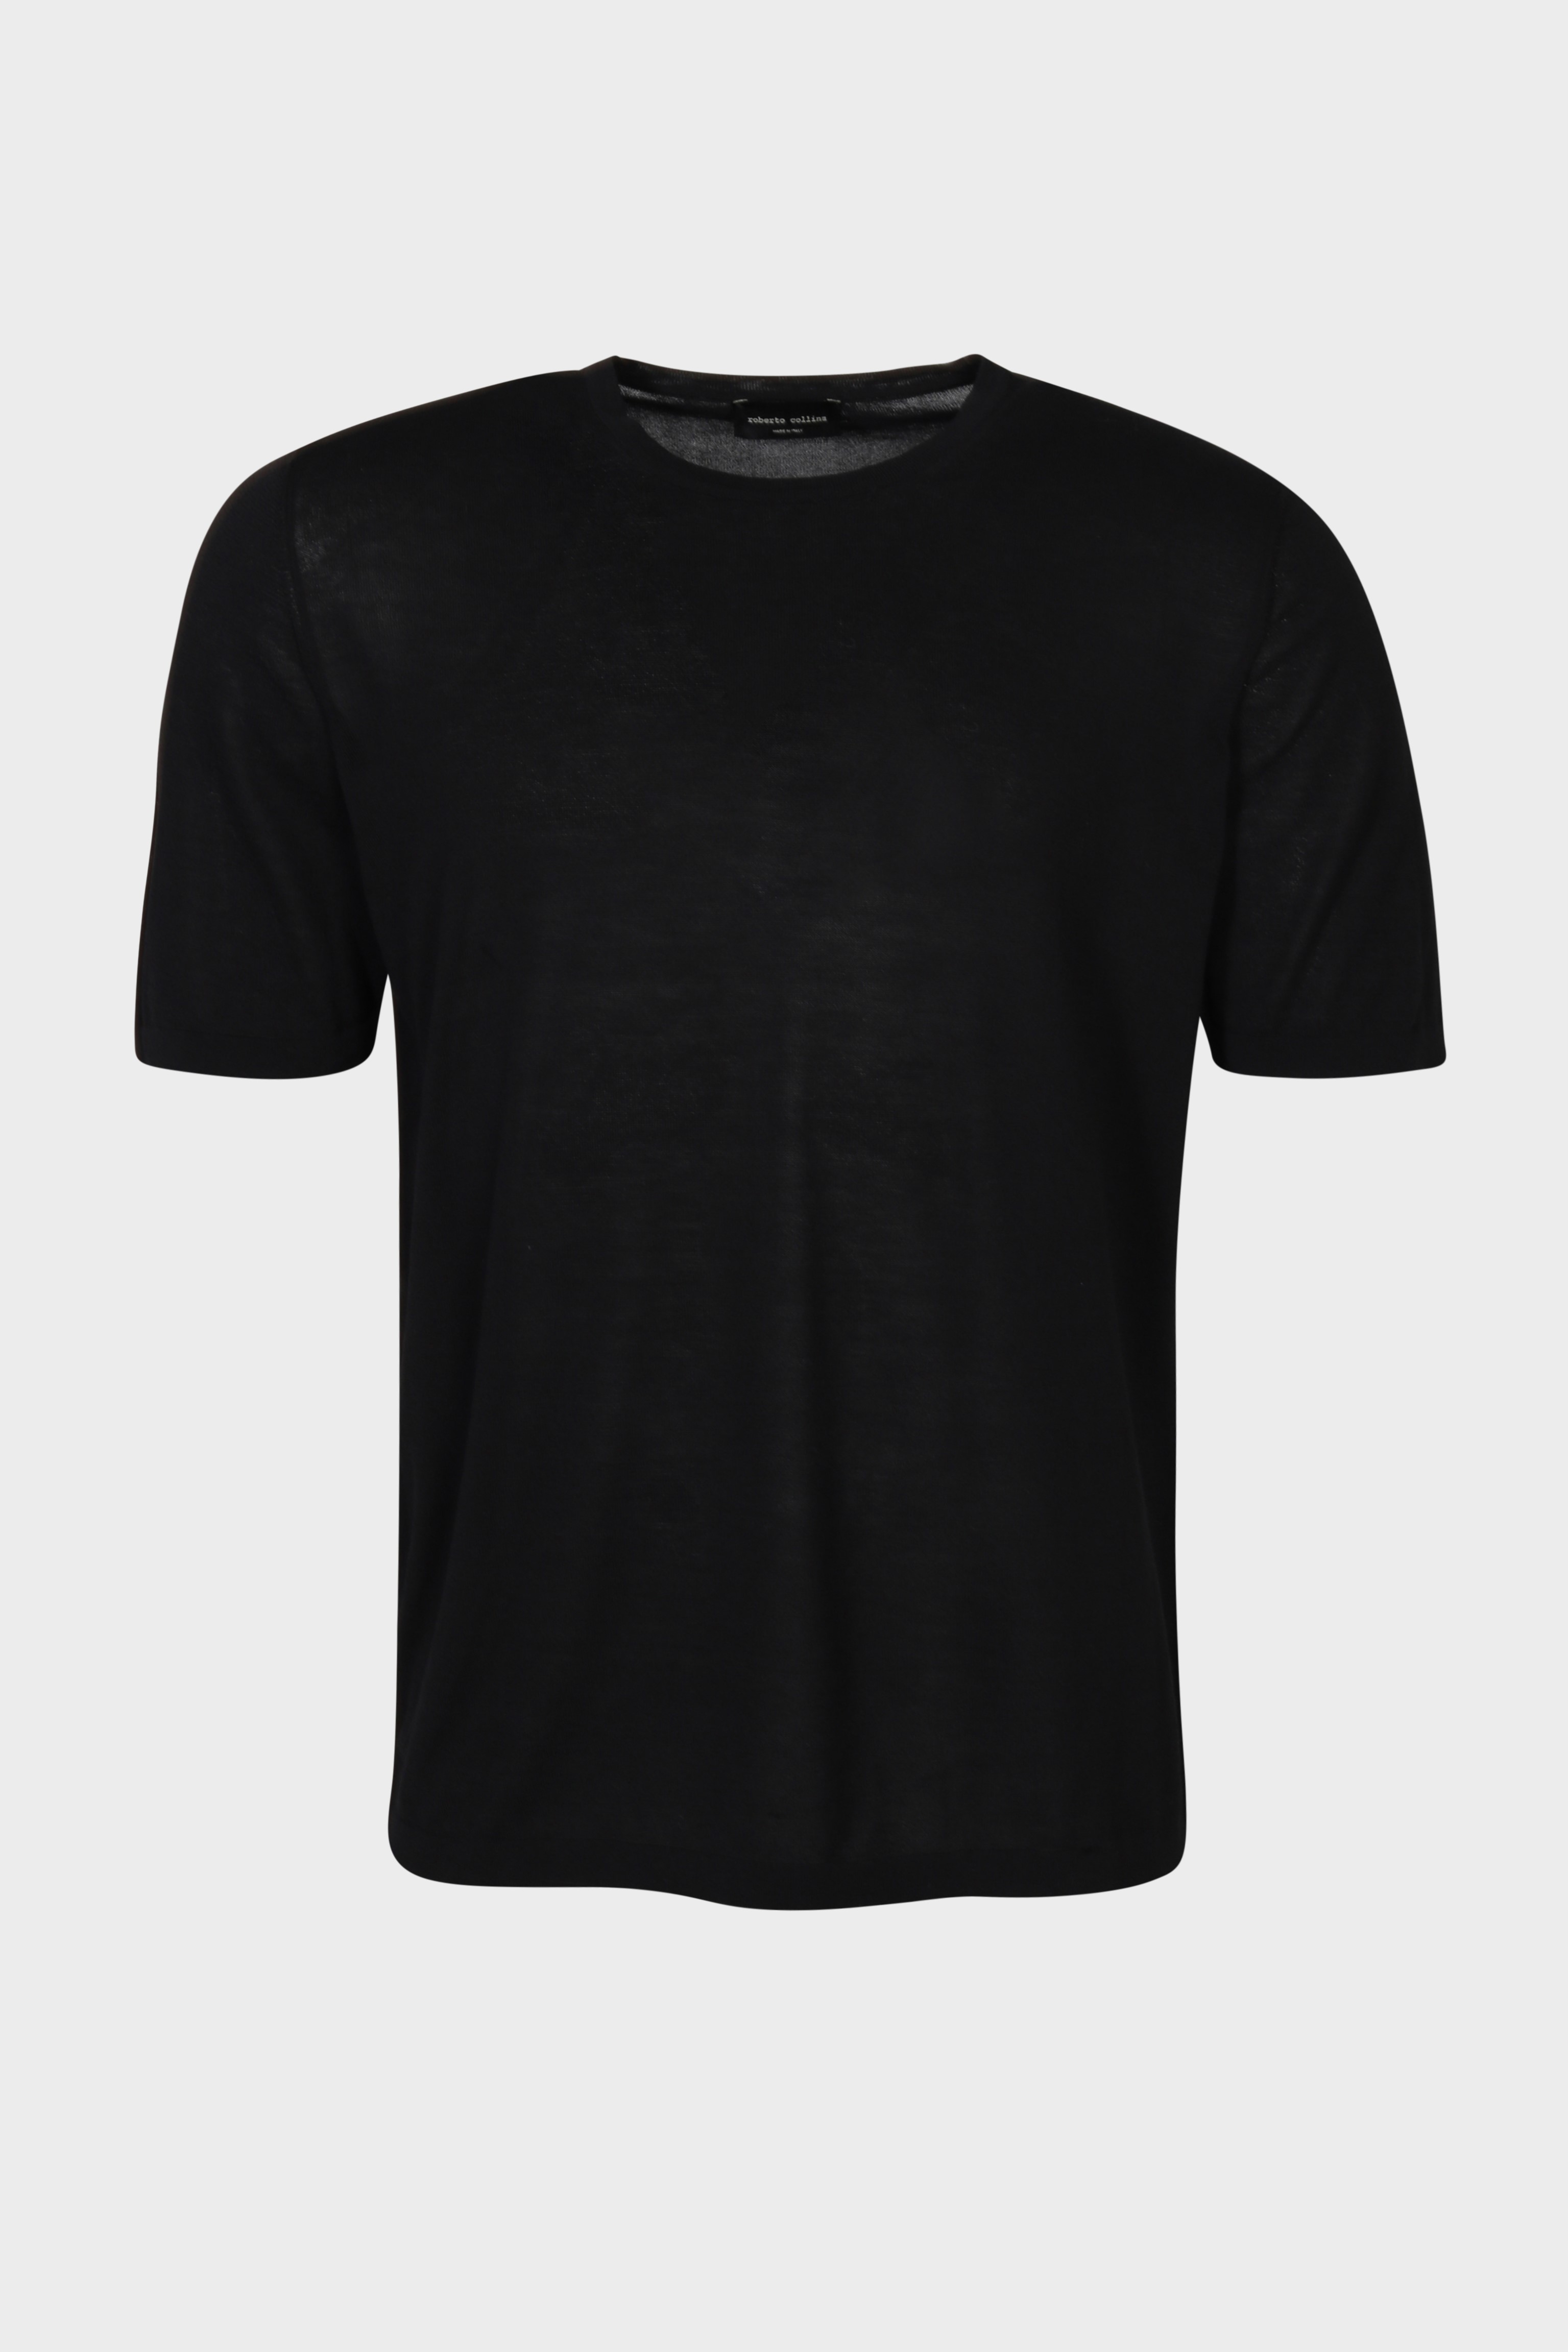 ROBERTO COLLINA Cotton Knit T-Shirt in Black 48